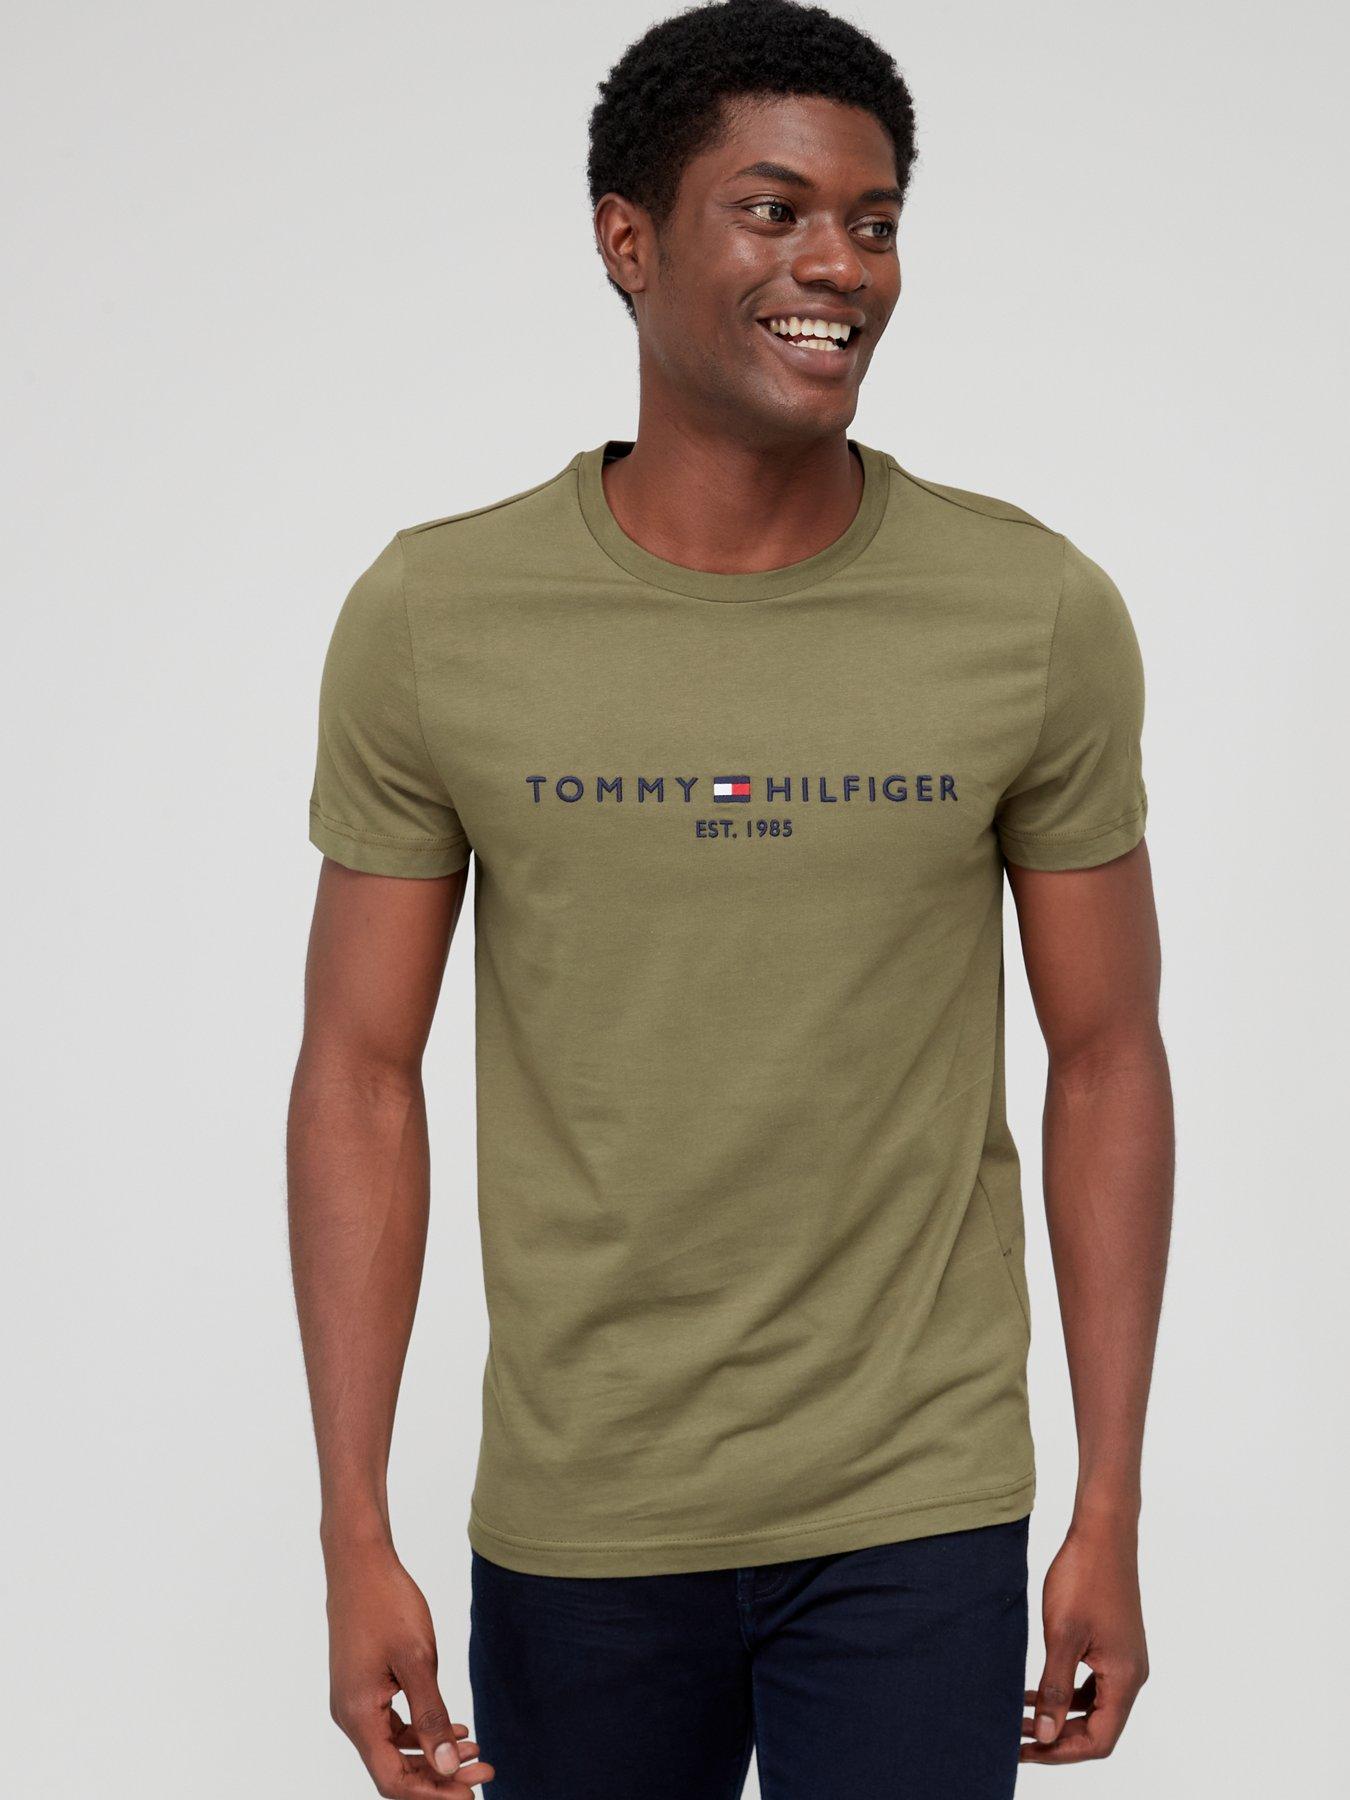 Tommy hilfiger | T-shirts & polos | Men | Very Ireland | T-Shirts